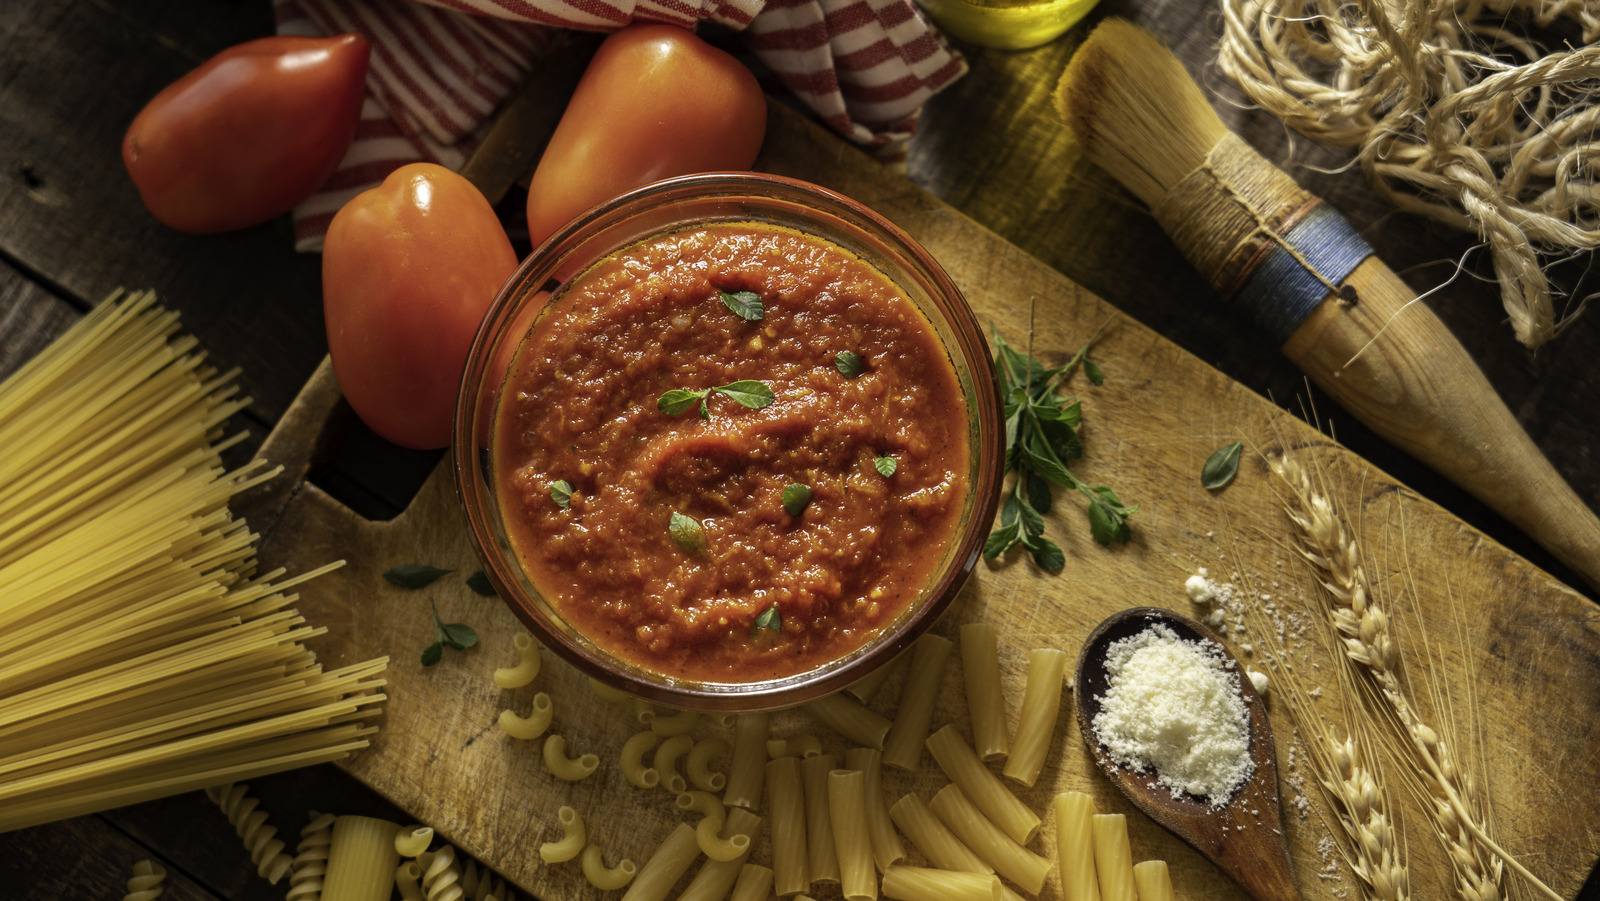 Homemade Spaghetti Sauce - Tastes Better From Scratch